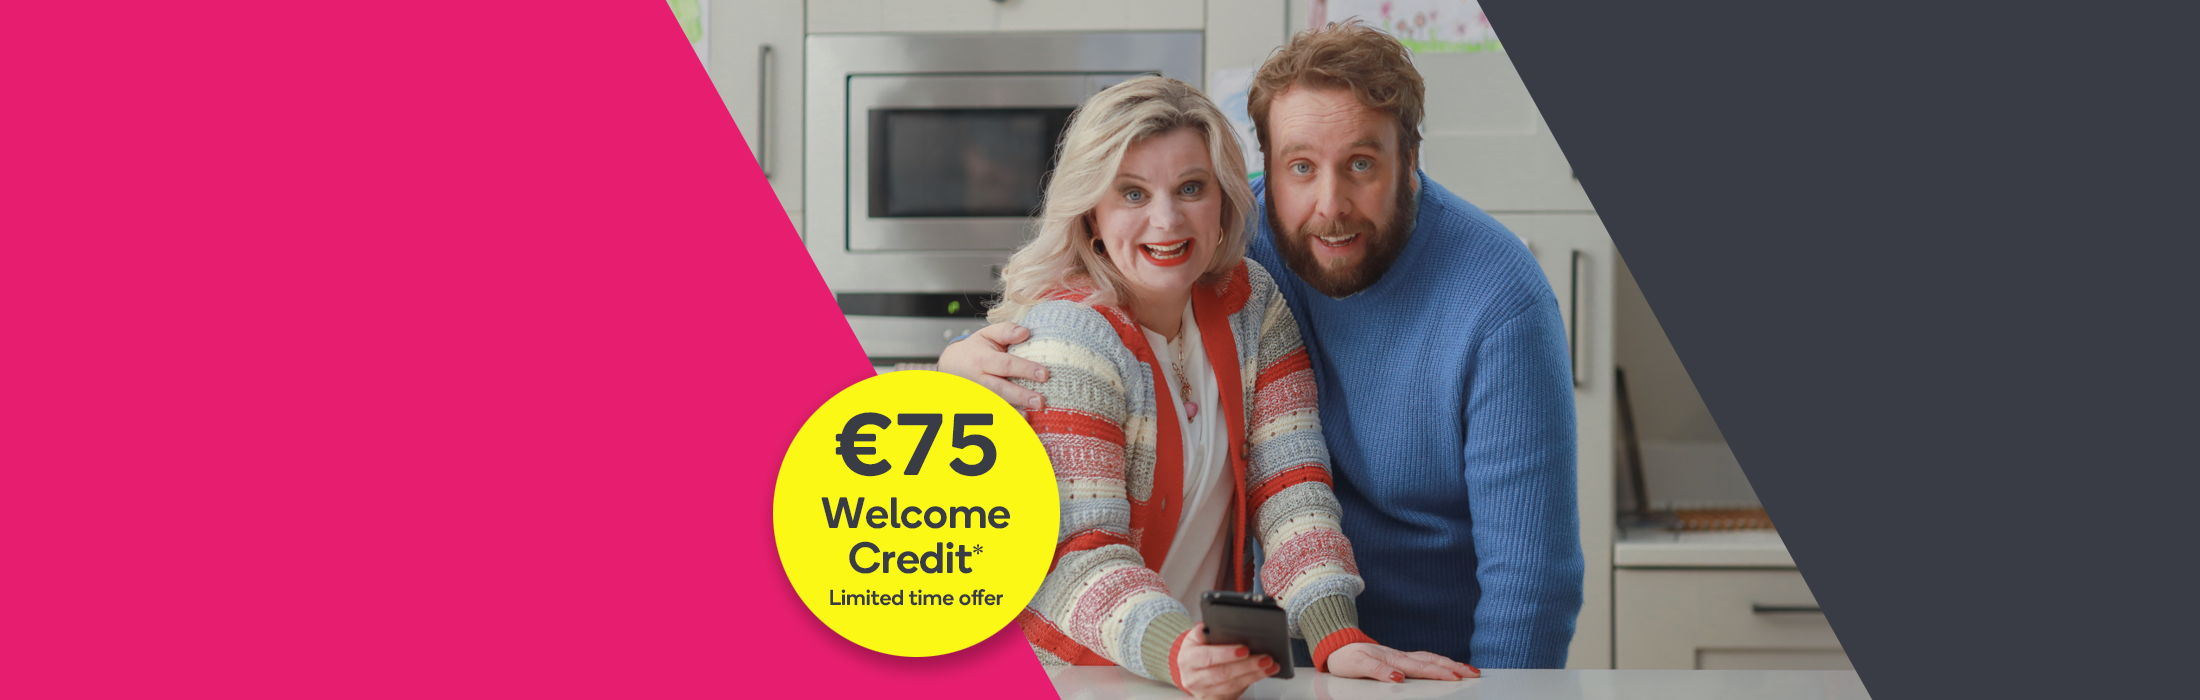 Hompage €75 limited offer